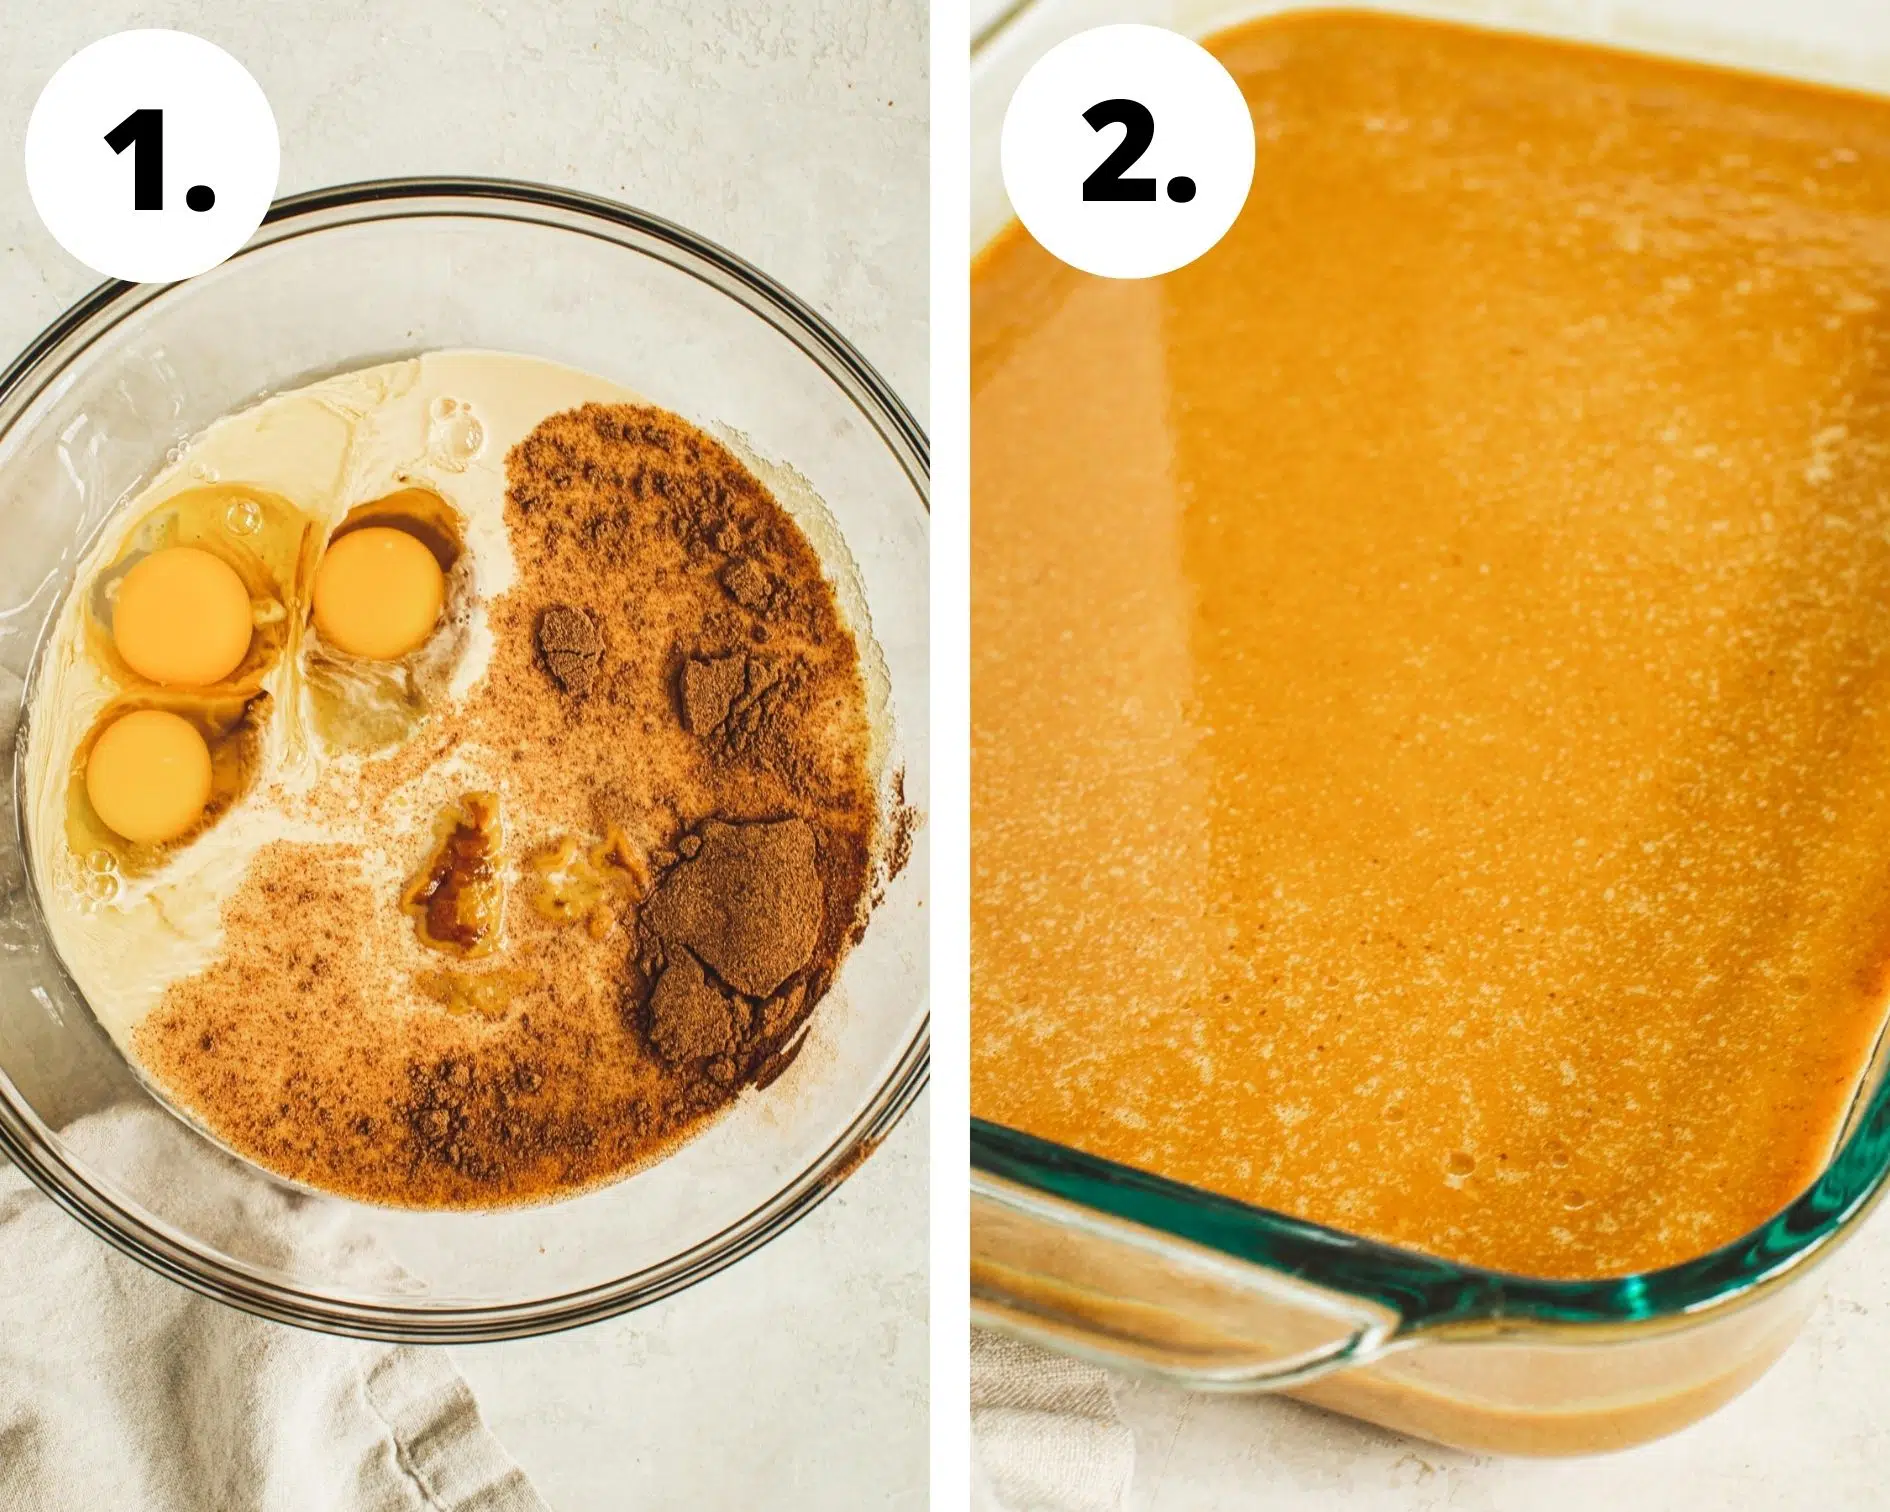 Pumpkin dump cake process steps 1 and 2.